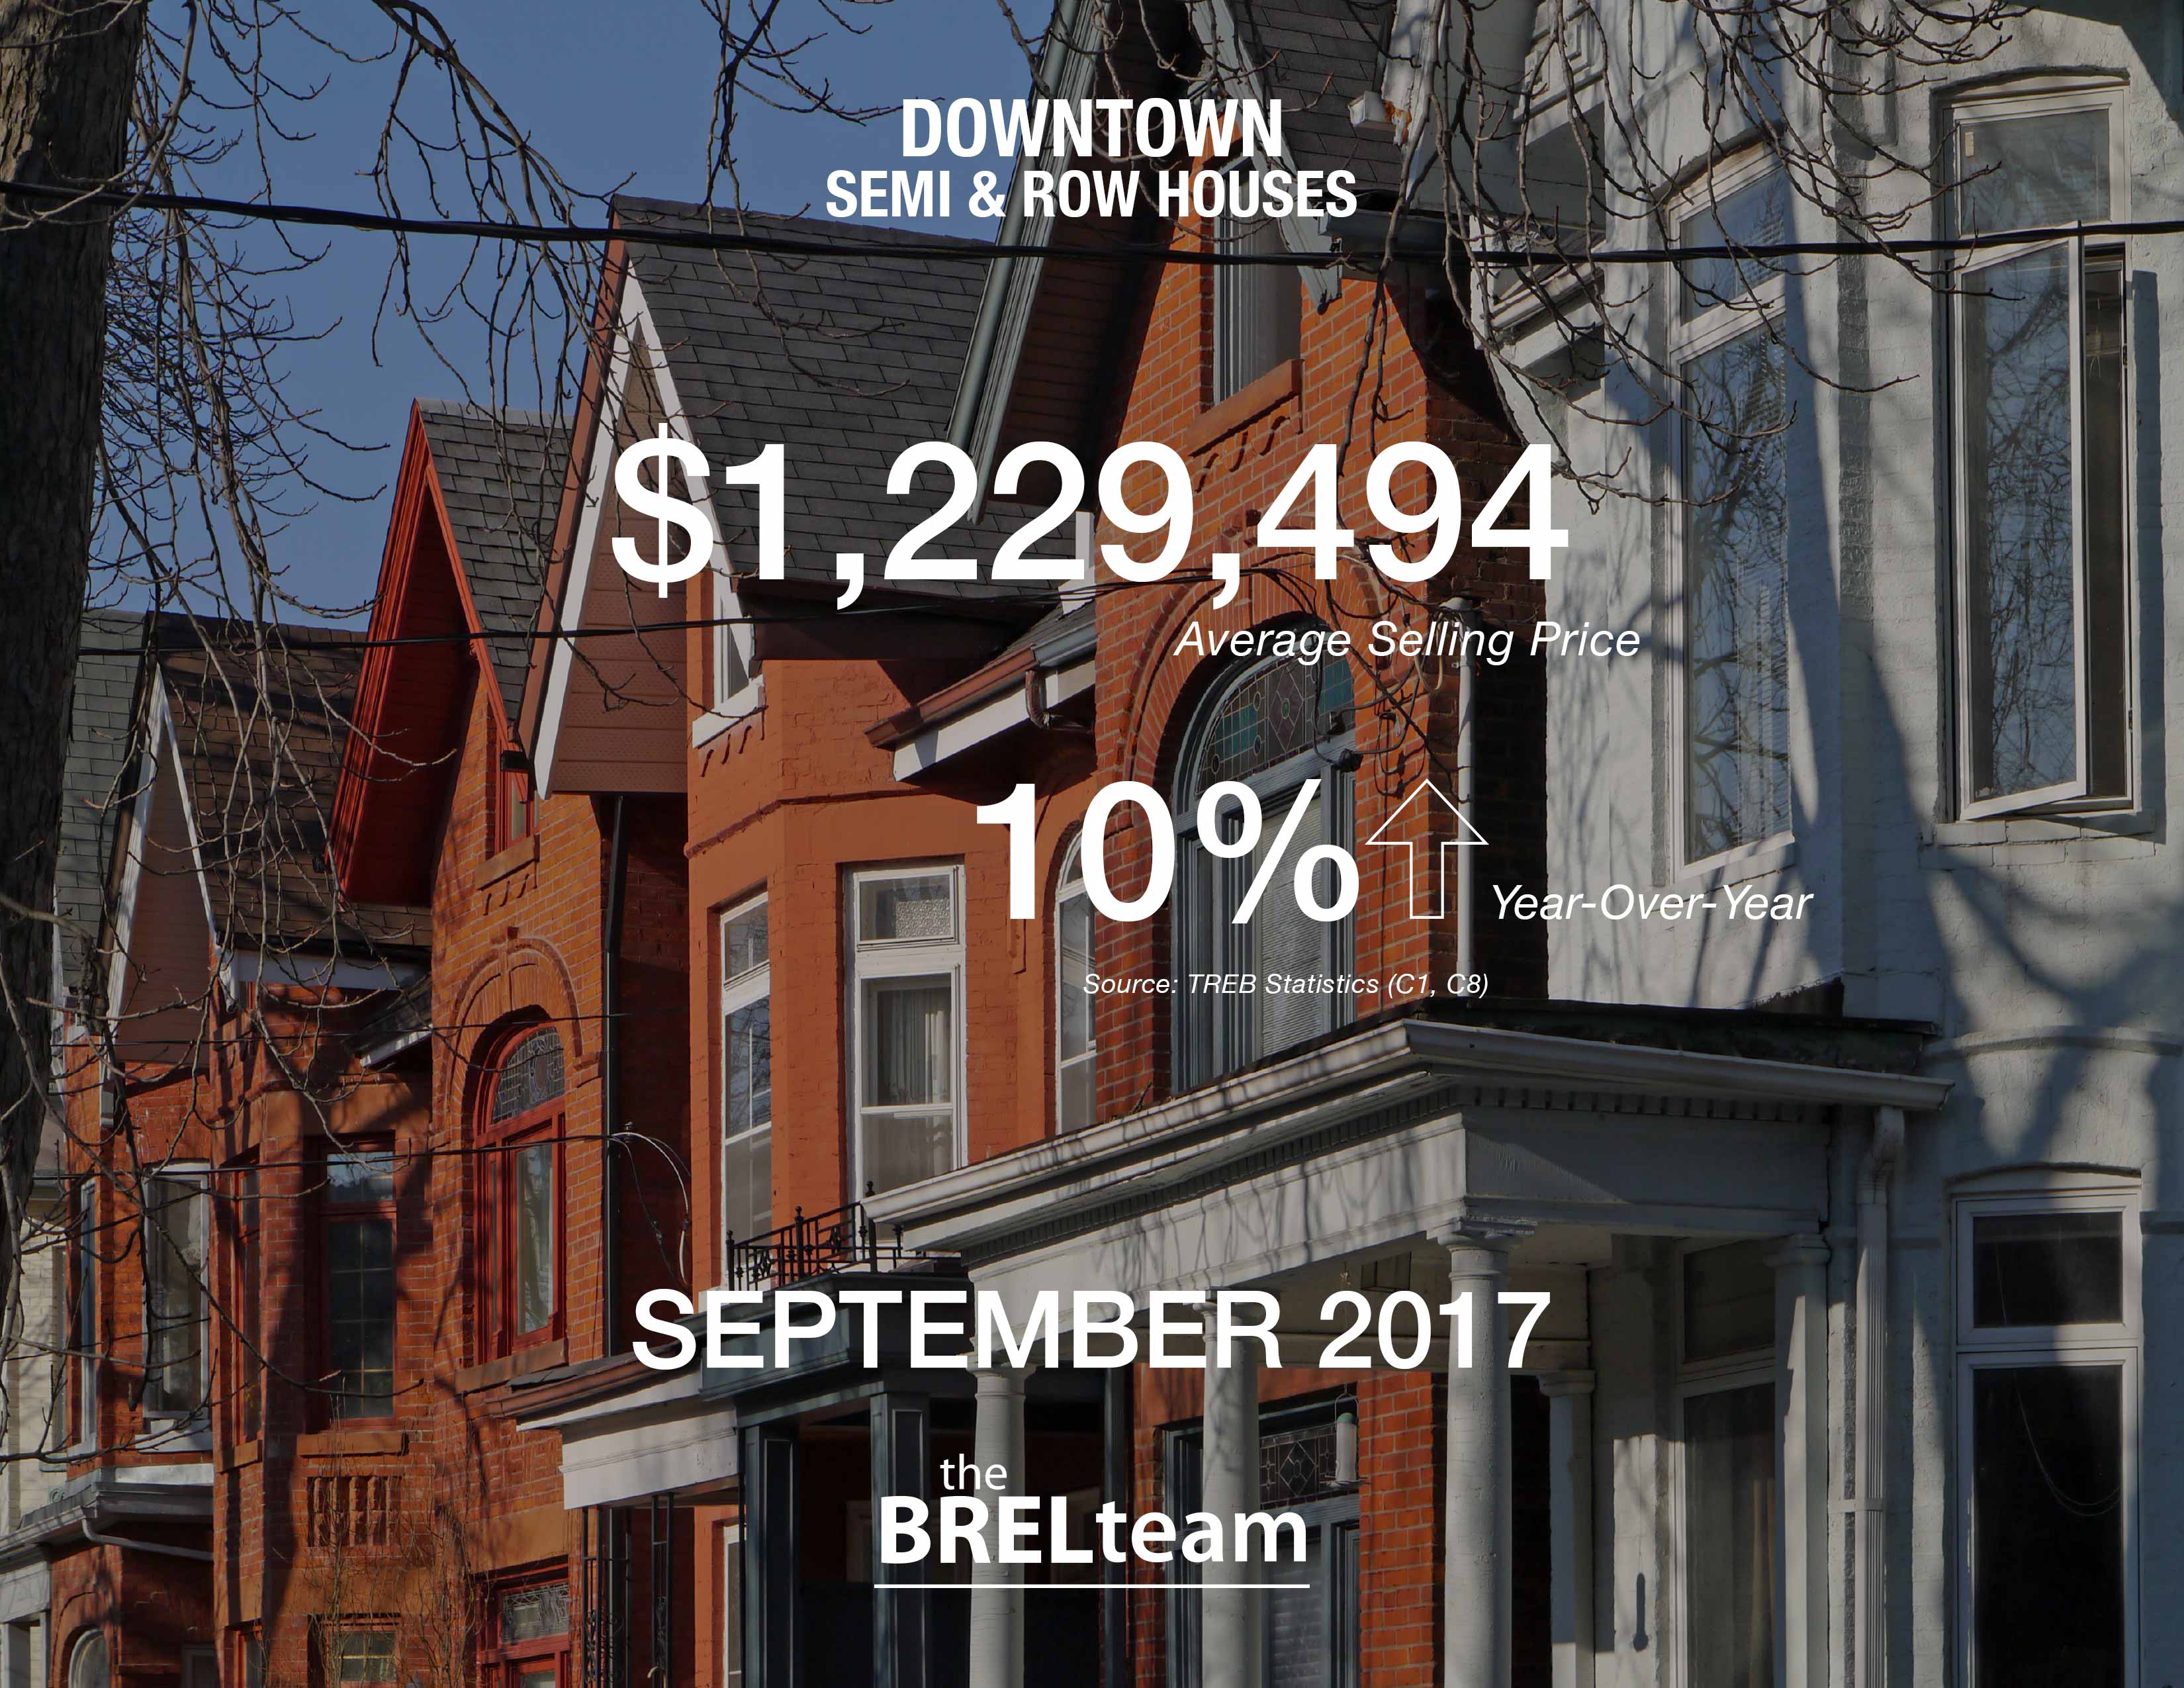 Toronto Real Estate, Real Estate, Toronto, Top Toronto Real Estate Team, Top Toronto Realtor, September 2017 Real Estate Sales Toronto